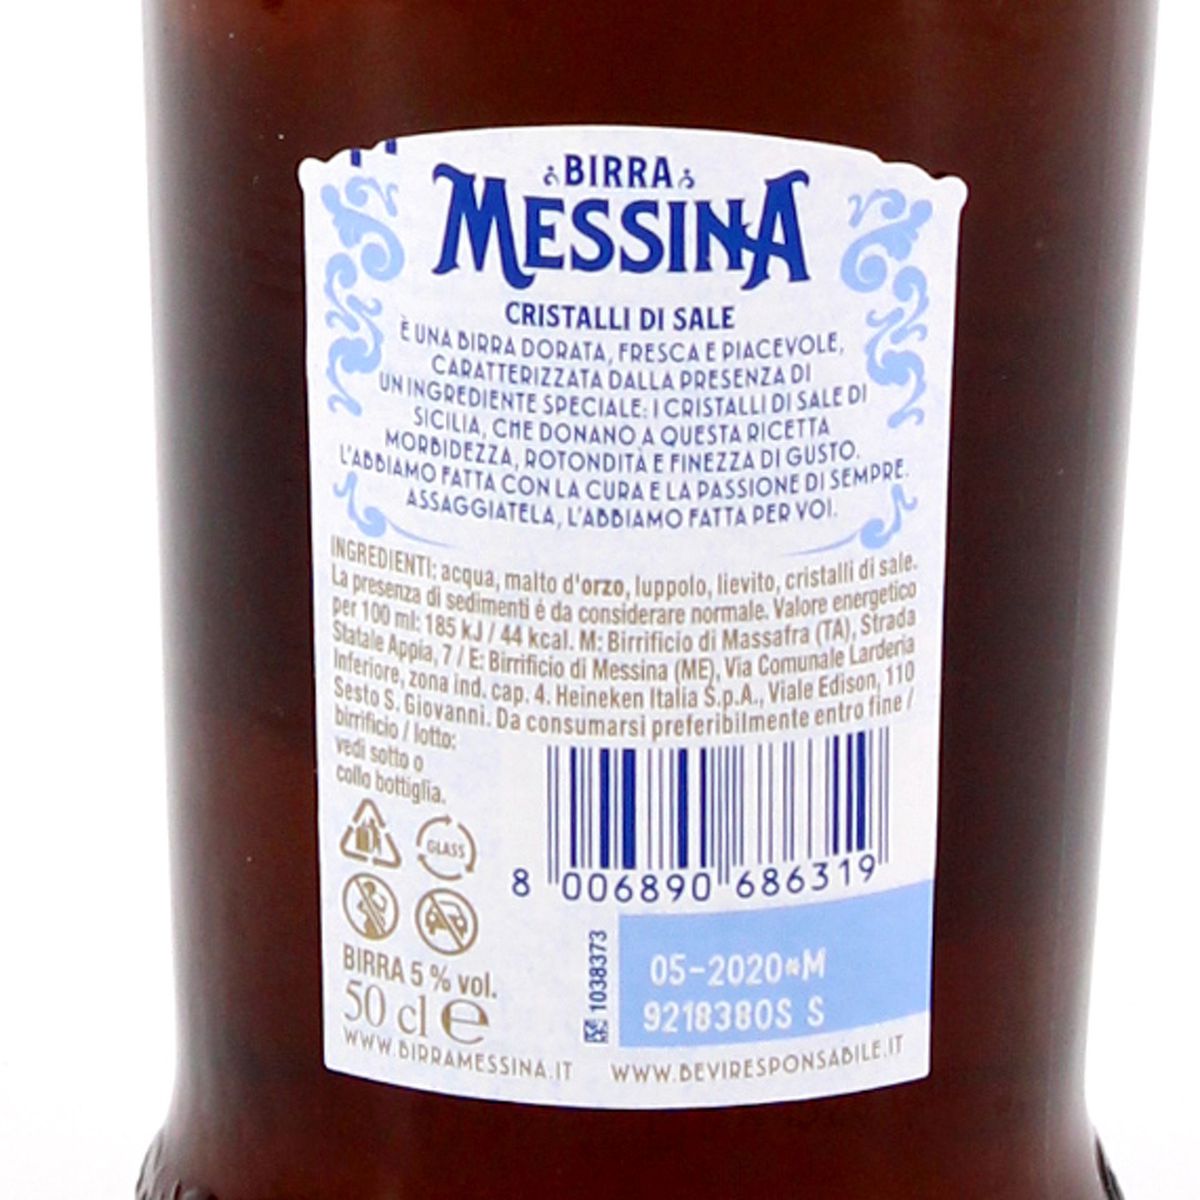 Messina Birra Cristalli di Sale 0,50l